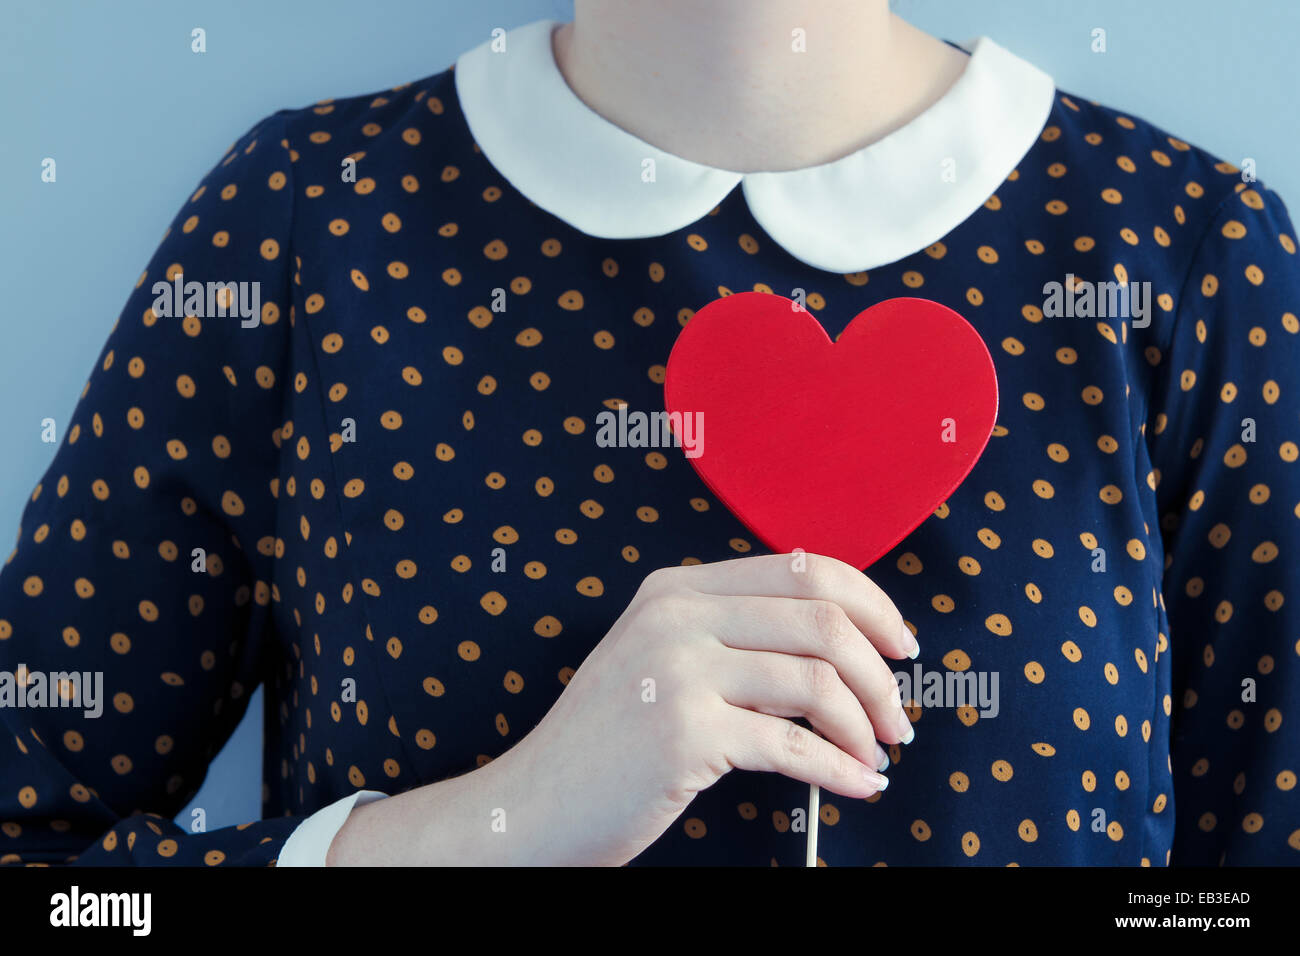 Frau mit Polka Dot Kleid Herz-Form-Objekt zu halten Stockfoto